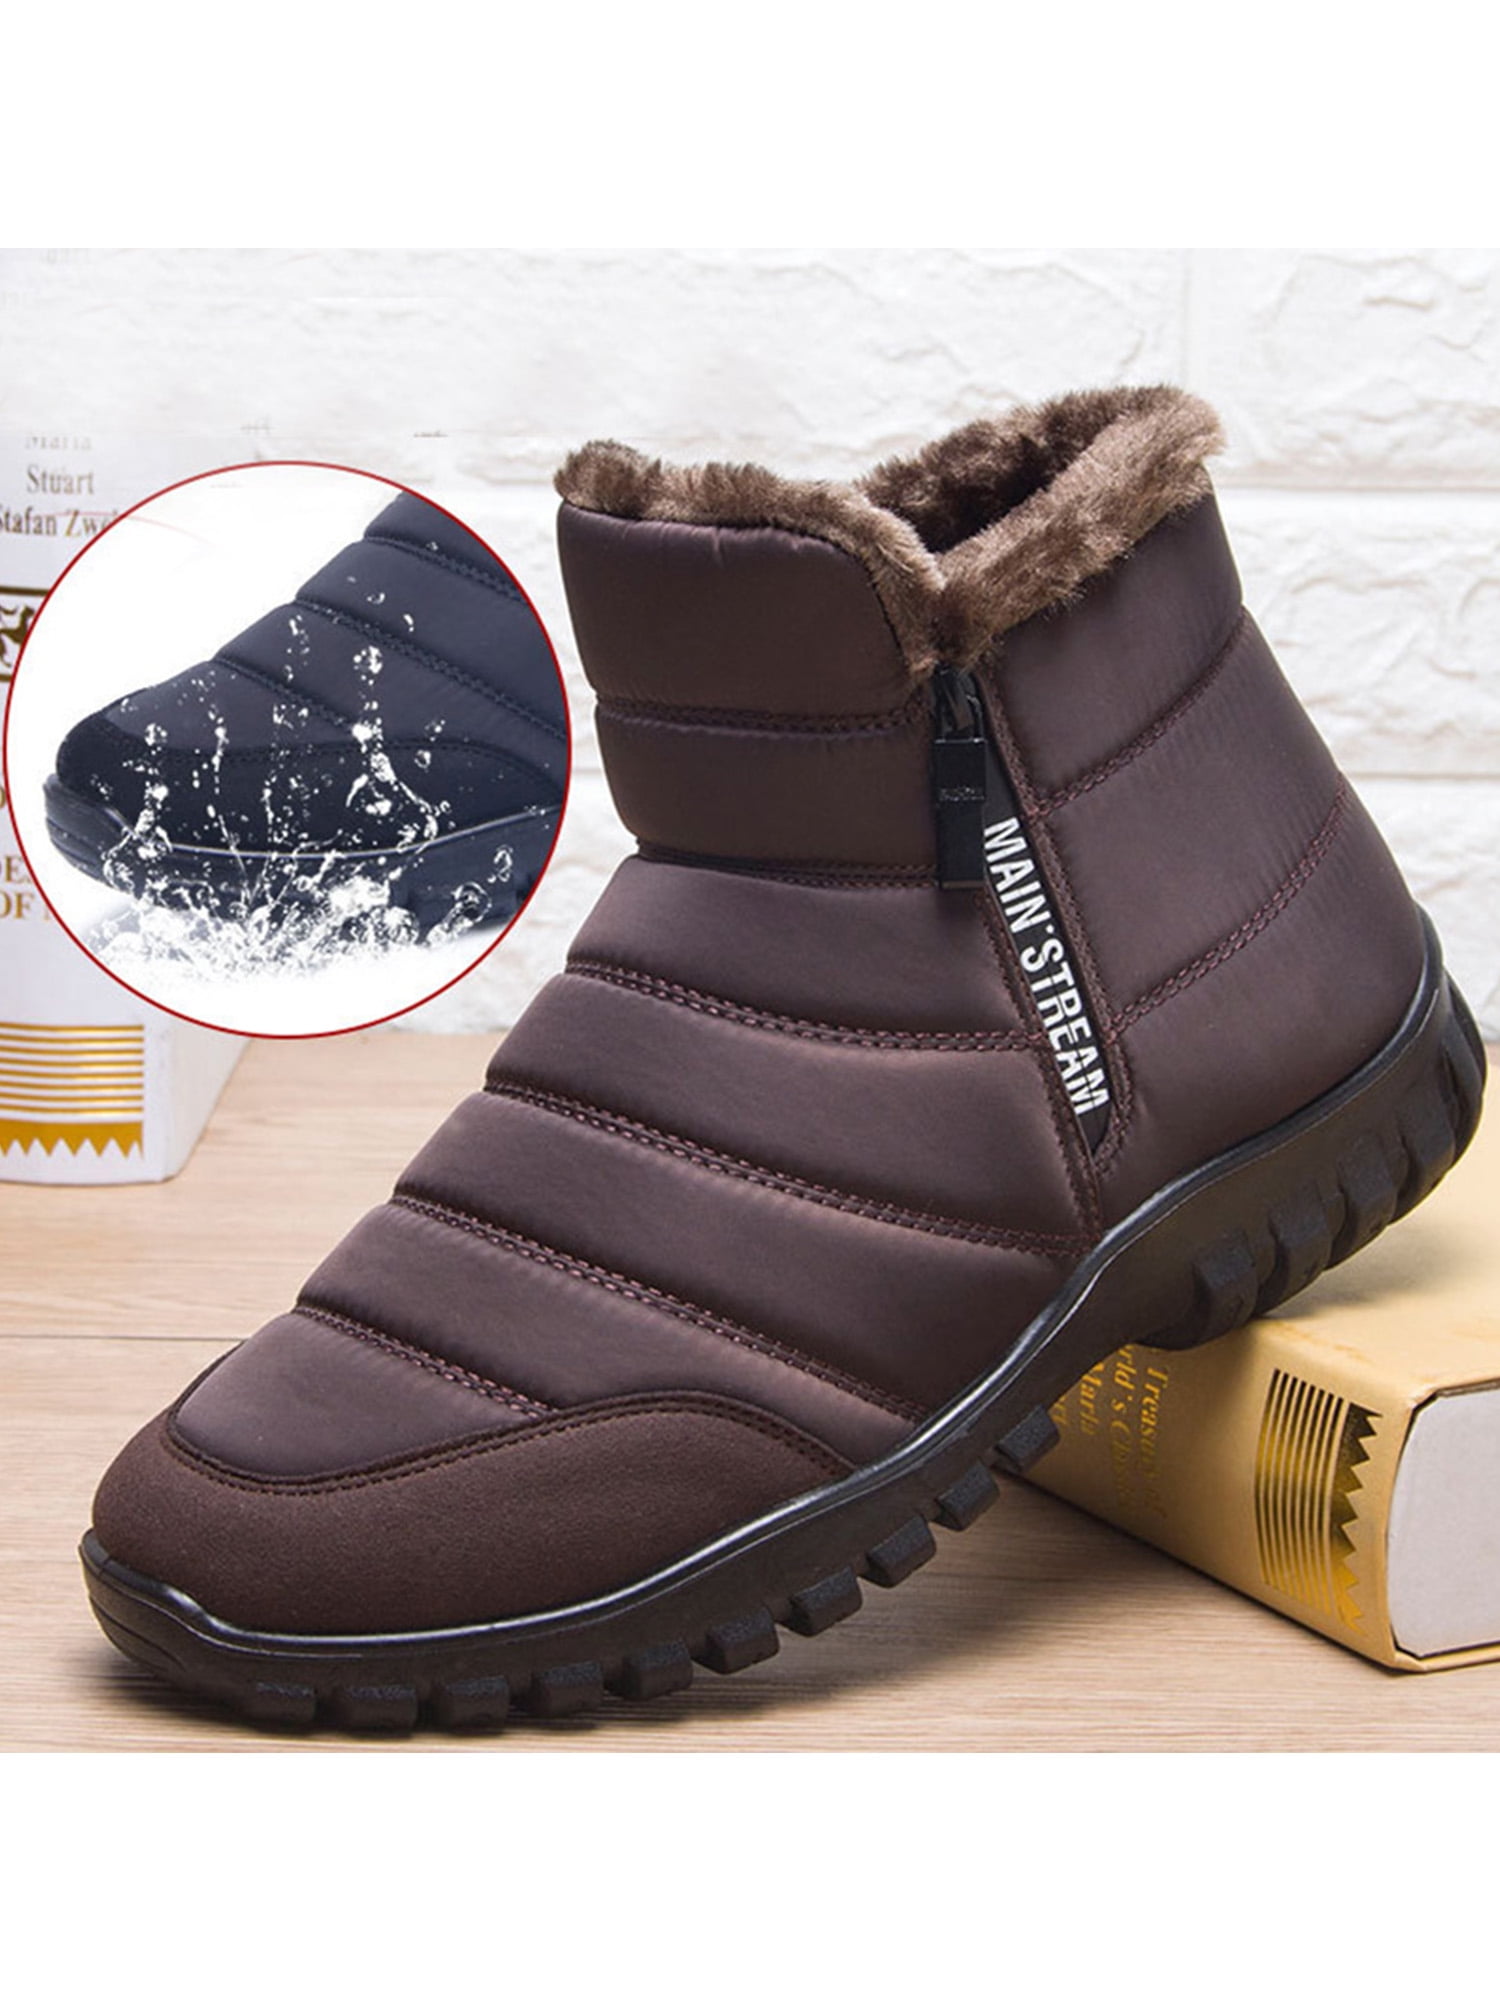 Men's Slippers Cozy Faux Fur Fleece House Warm Shoes Non Skid Down Fabric UK4-11 